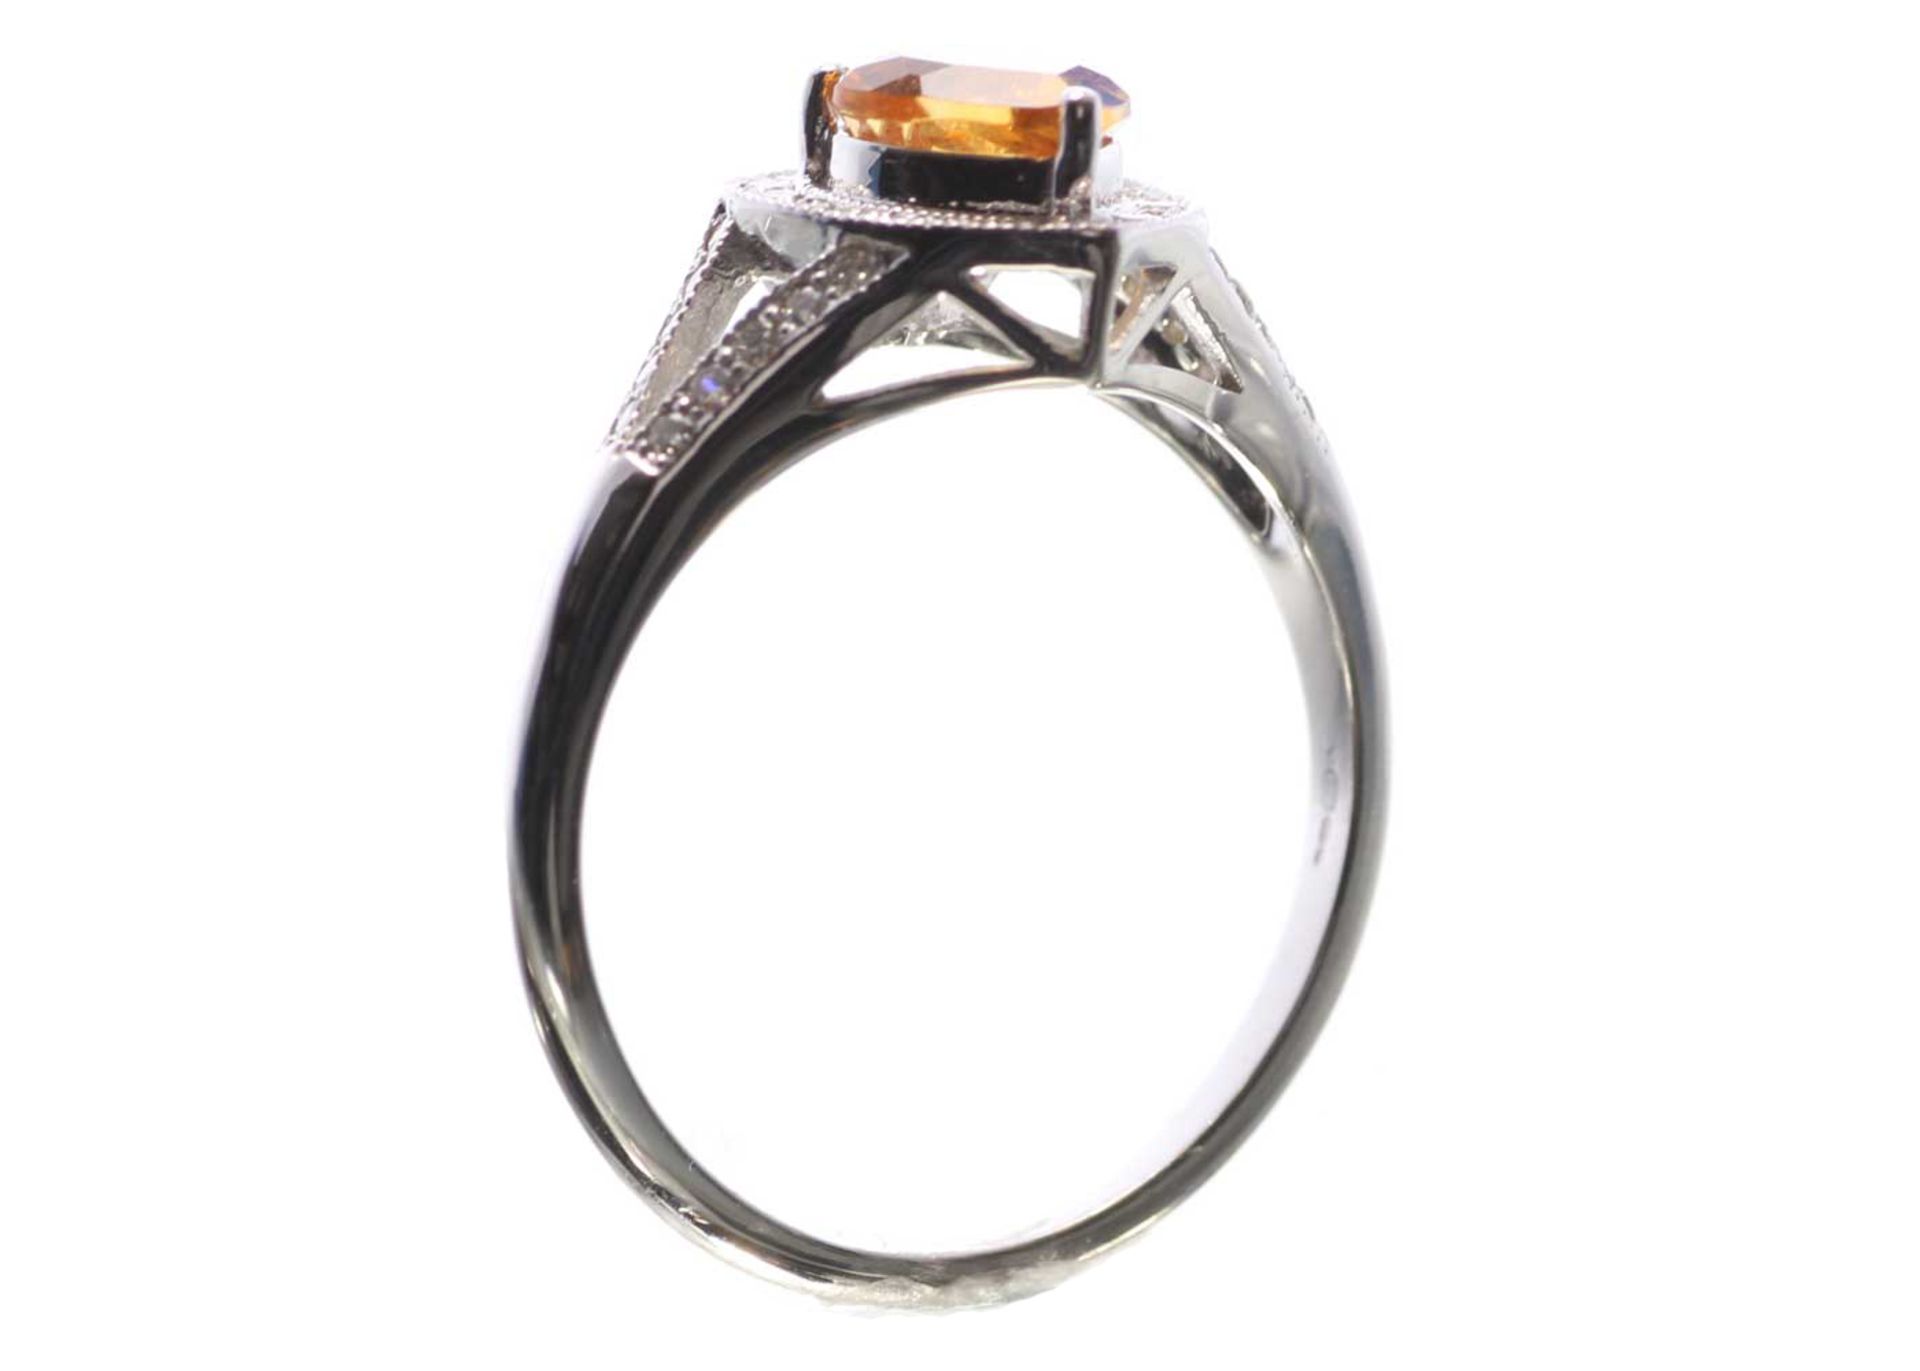 9ct White Gold Heart Shape Citrine Diamond Ring 0.20 Carats - Image 3 of 4